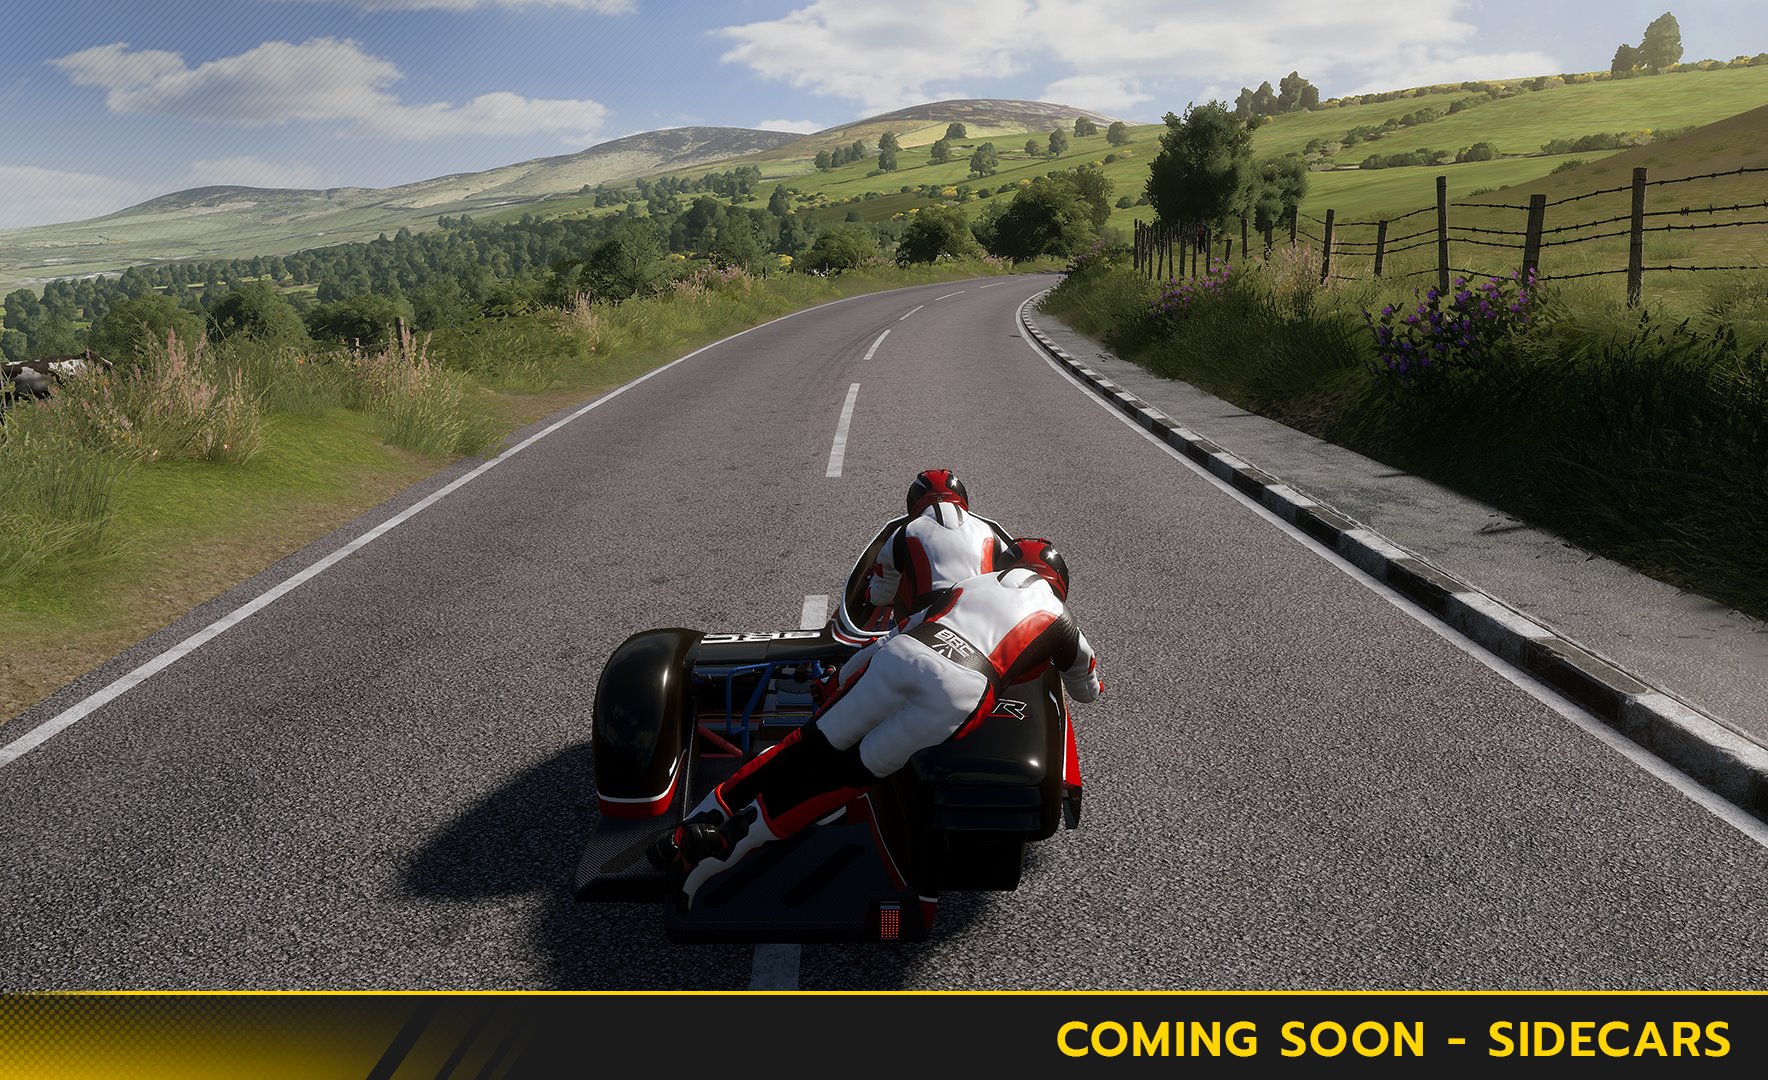 TT Isle of Man the Game - Sidecars Announced 2.jpg